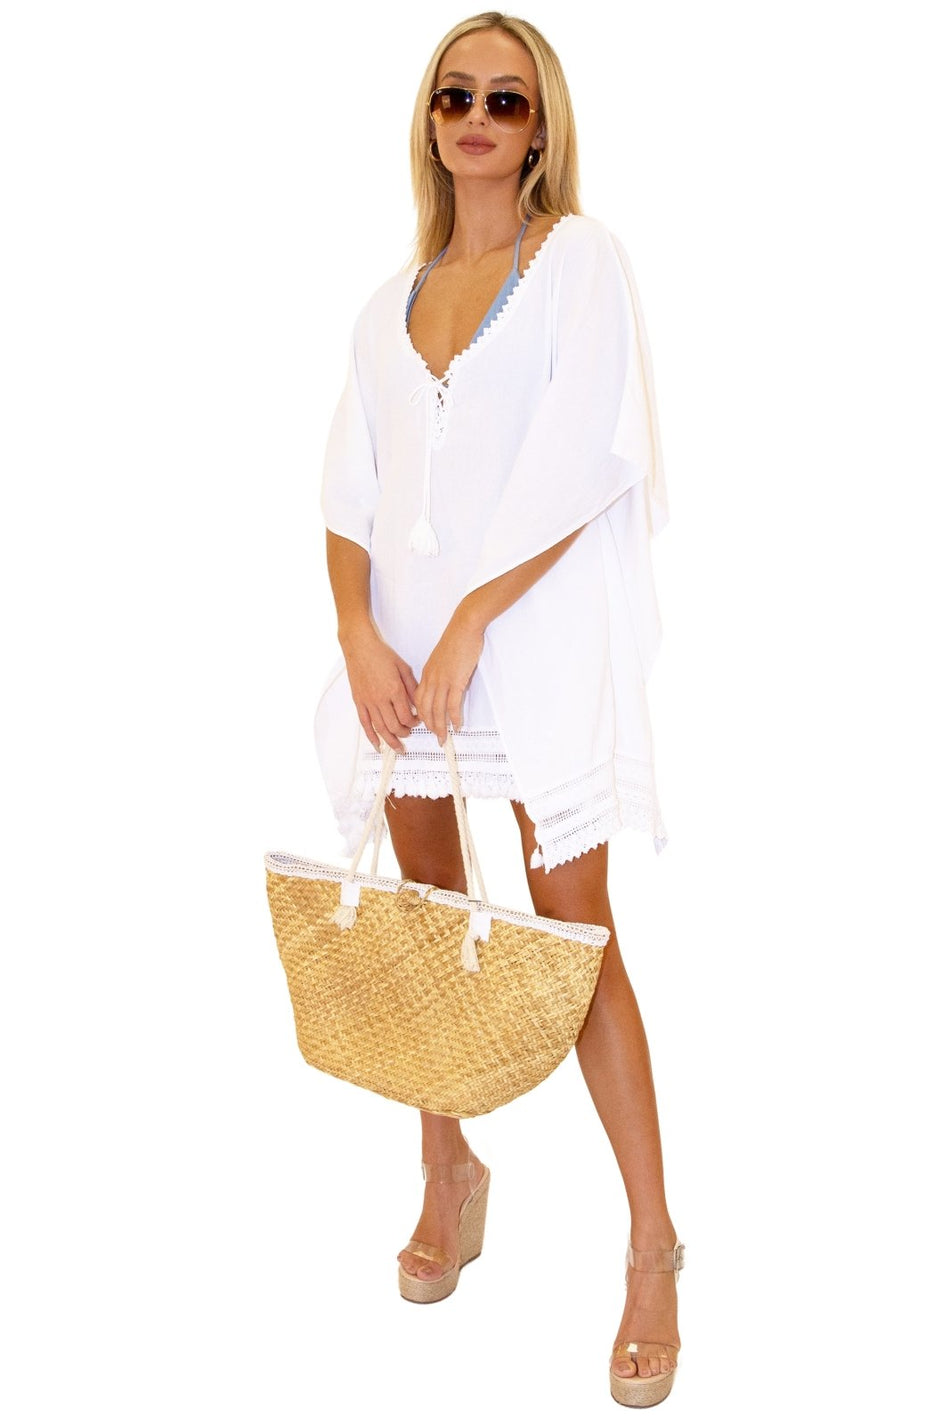 'Celeste' Boho Tunic Cover-Up White - Seaspice Resort Wear